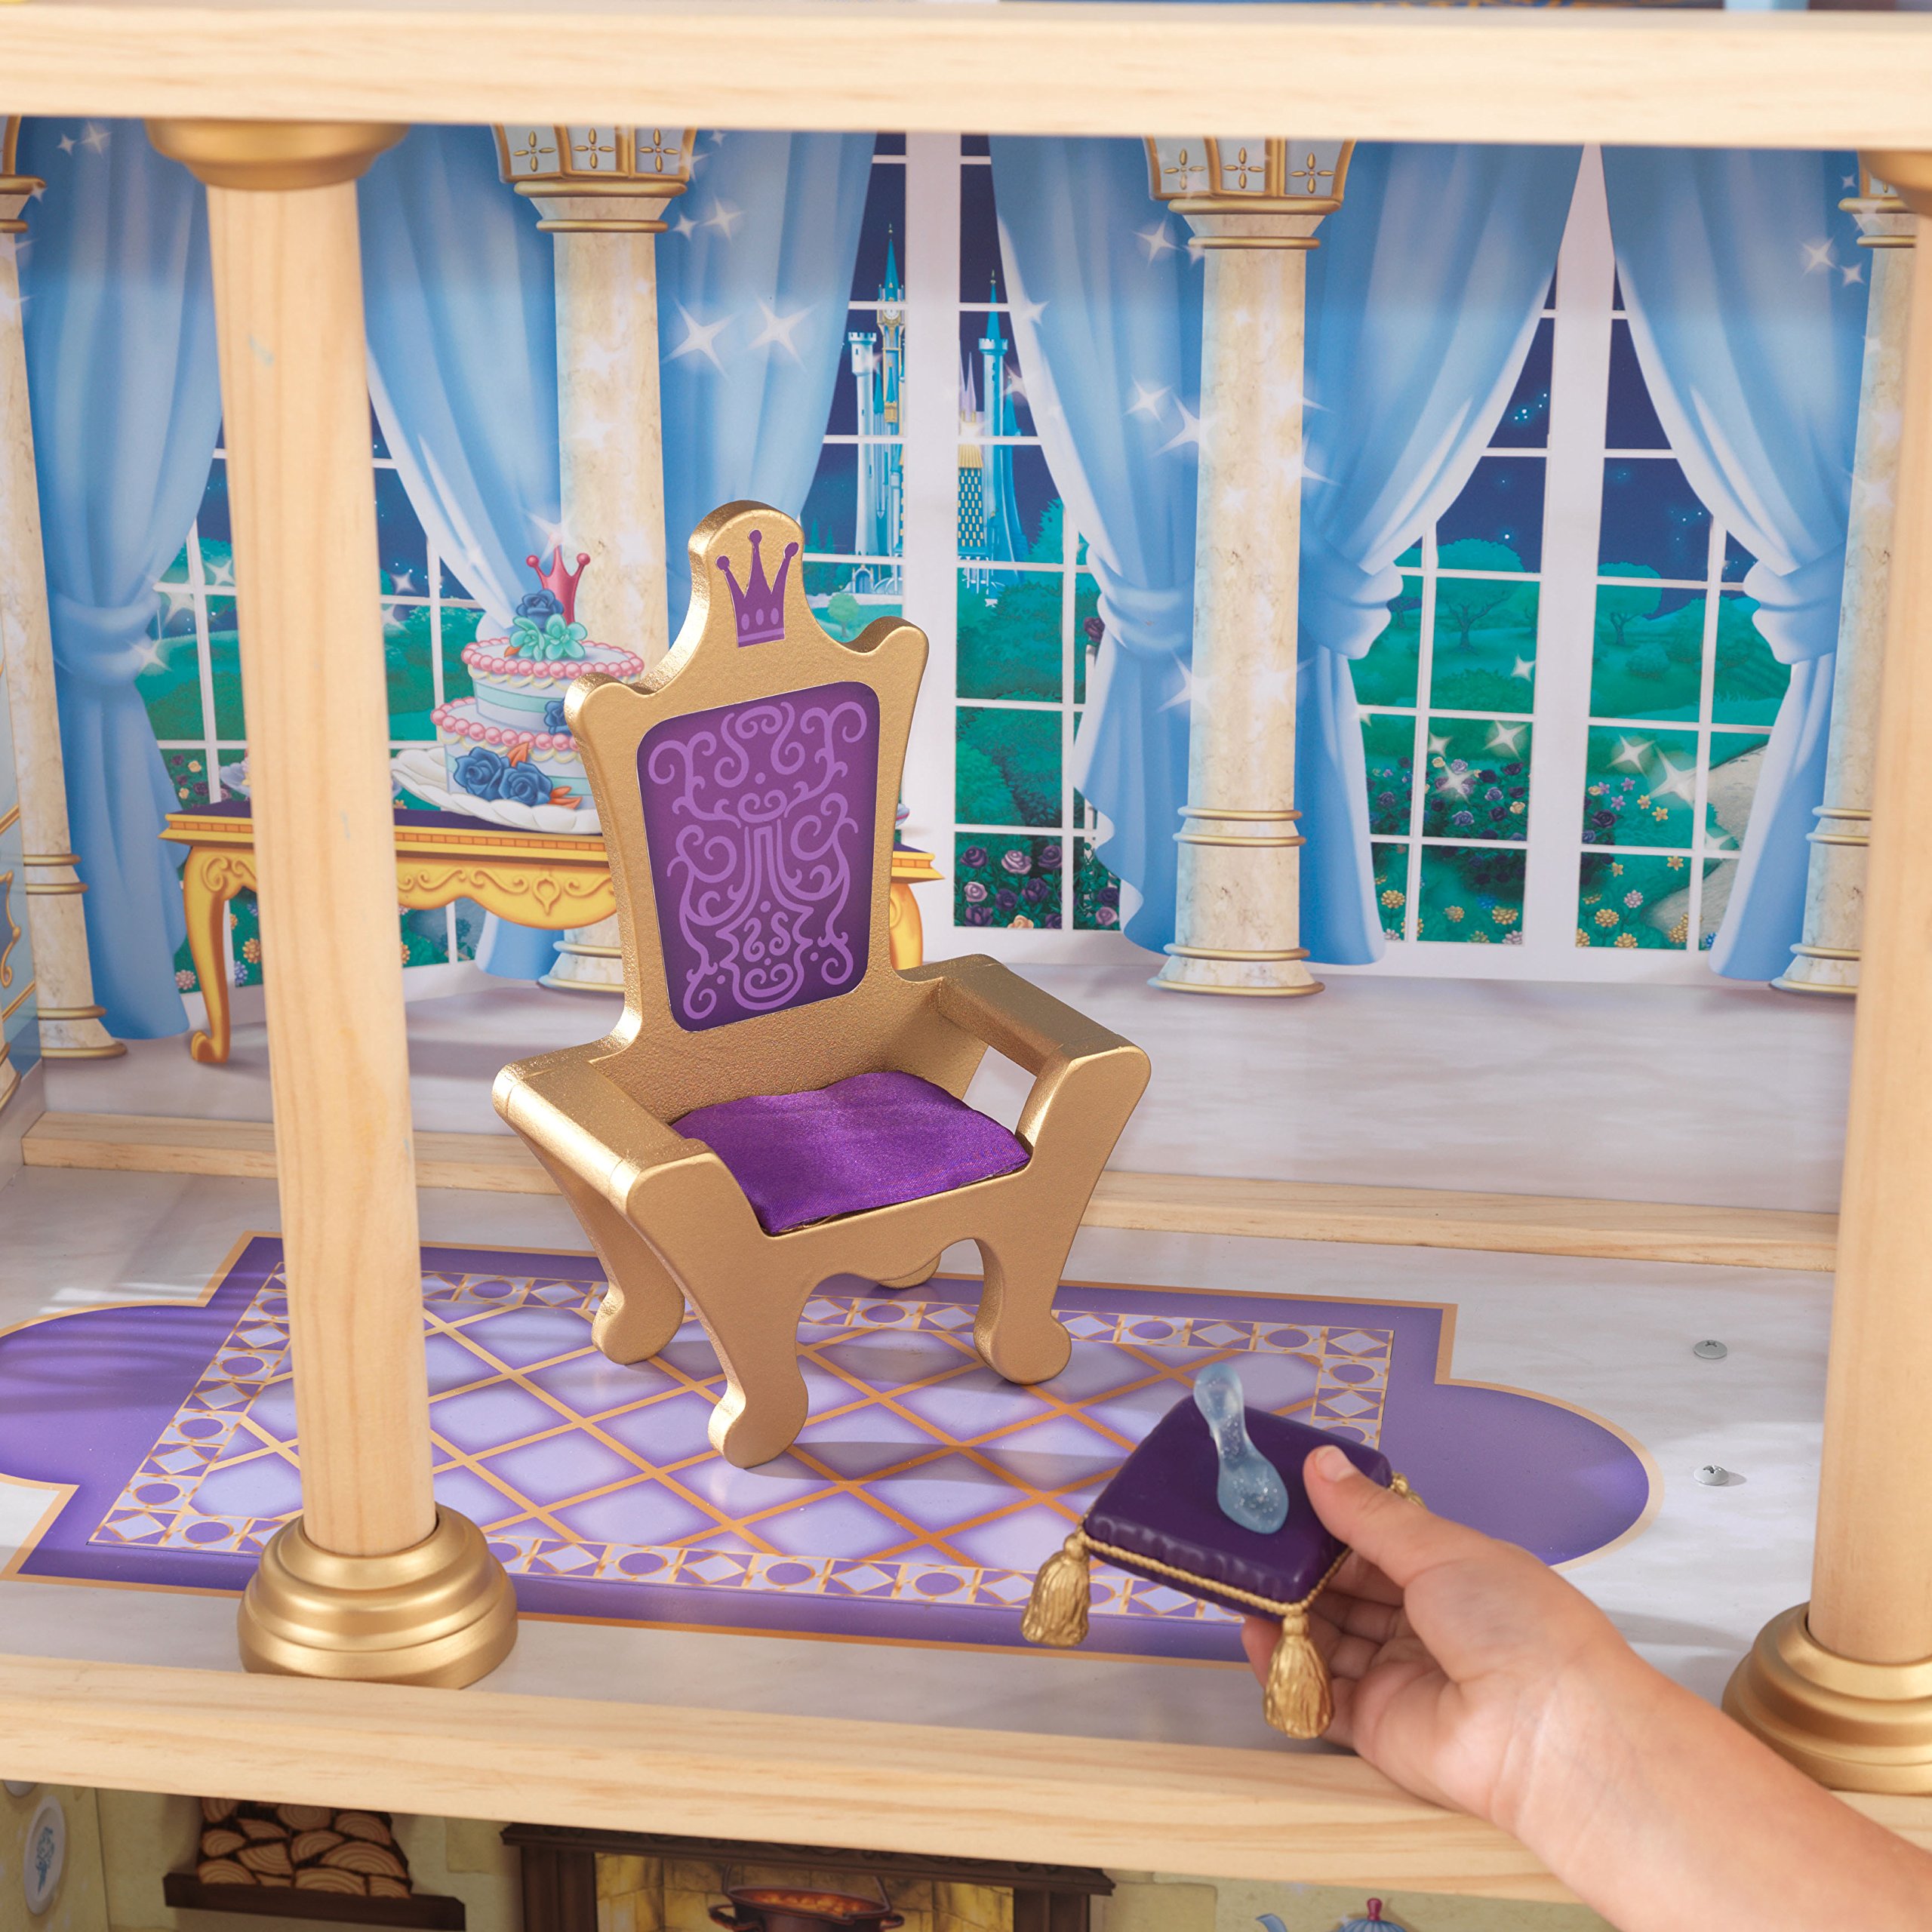 KidKraft Disney® Princess Cinderella Royal Dream Dollhouse by KidKraft, Gift for Ages 3+